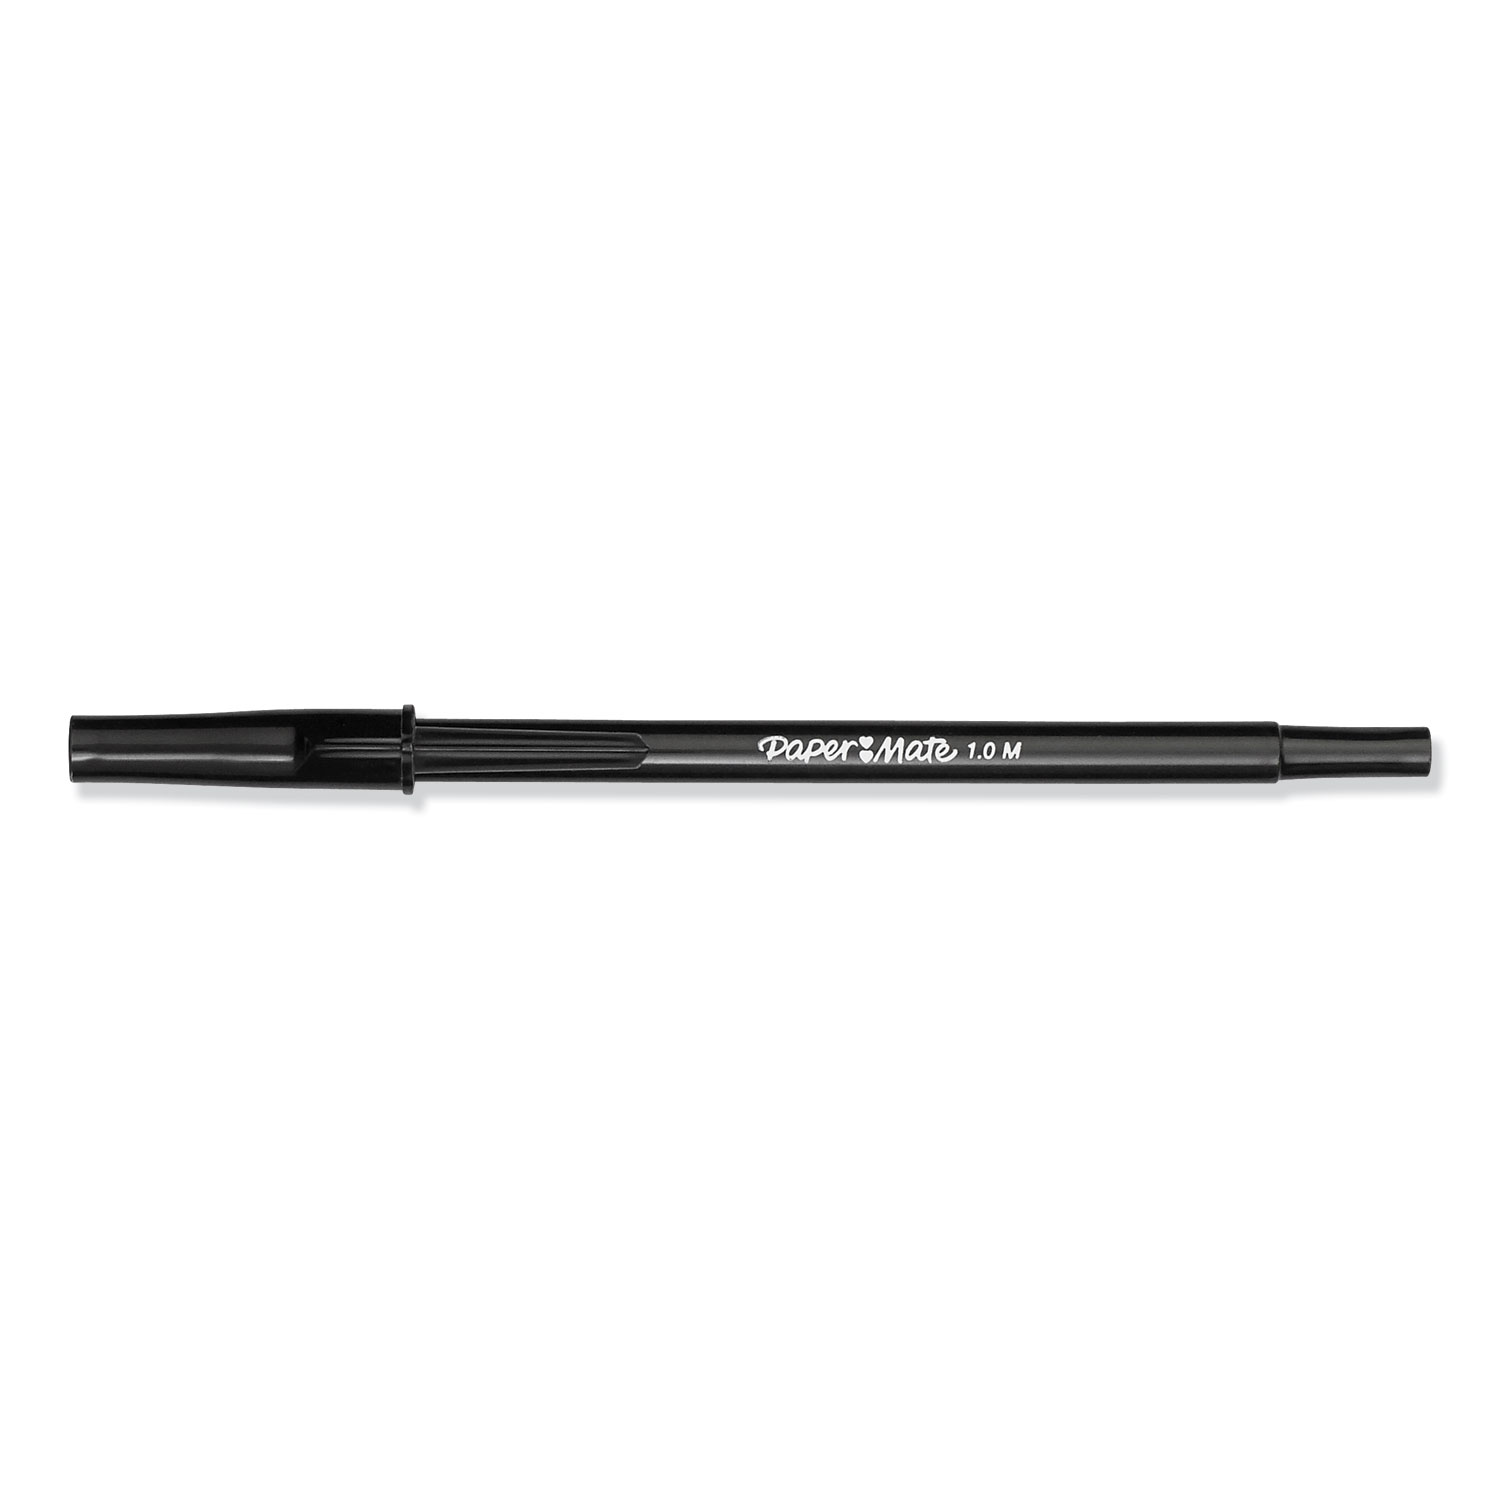  Paper Mate 4621401C Write Bros. Stick Ballpoint Pen Value Pack, 1mm, Black Ink/Barrel, 60/Pack (PAP4621401C) 